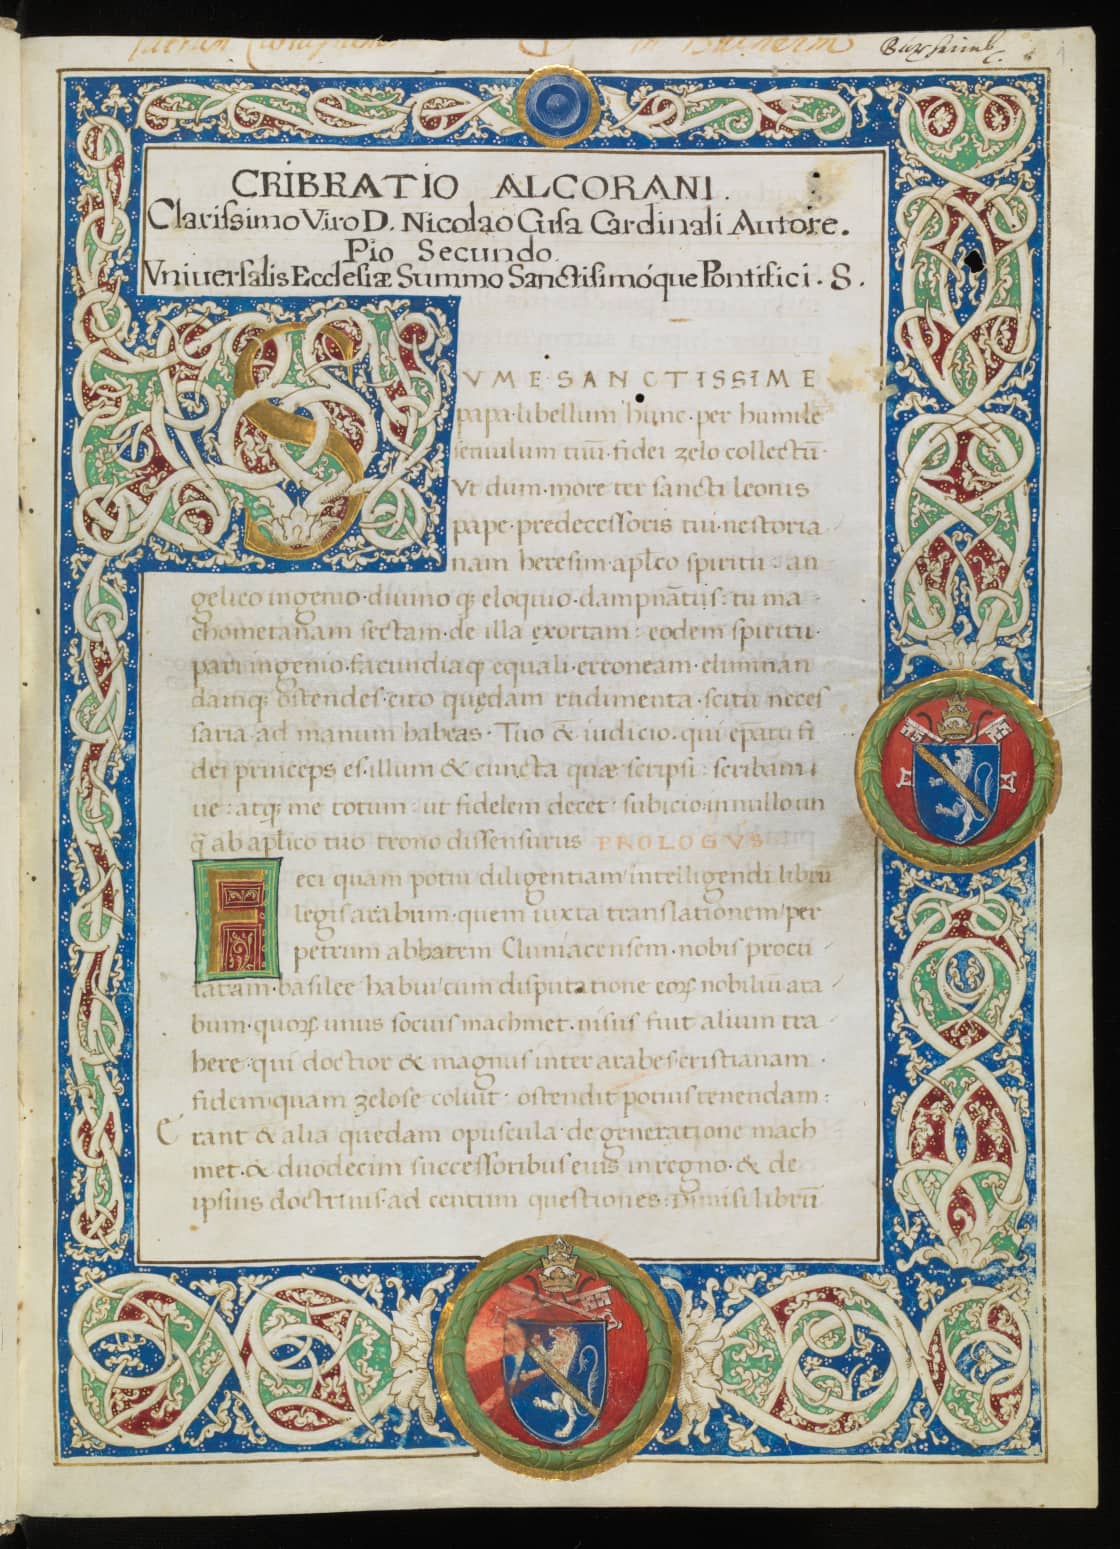 Frauenfeld, Kantonsbibliothek Thurgau, Y 39, f. 1r – Nicolaus Cusa: Cribratio Alcorani and Contra Bohemos